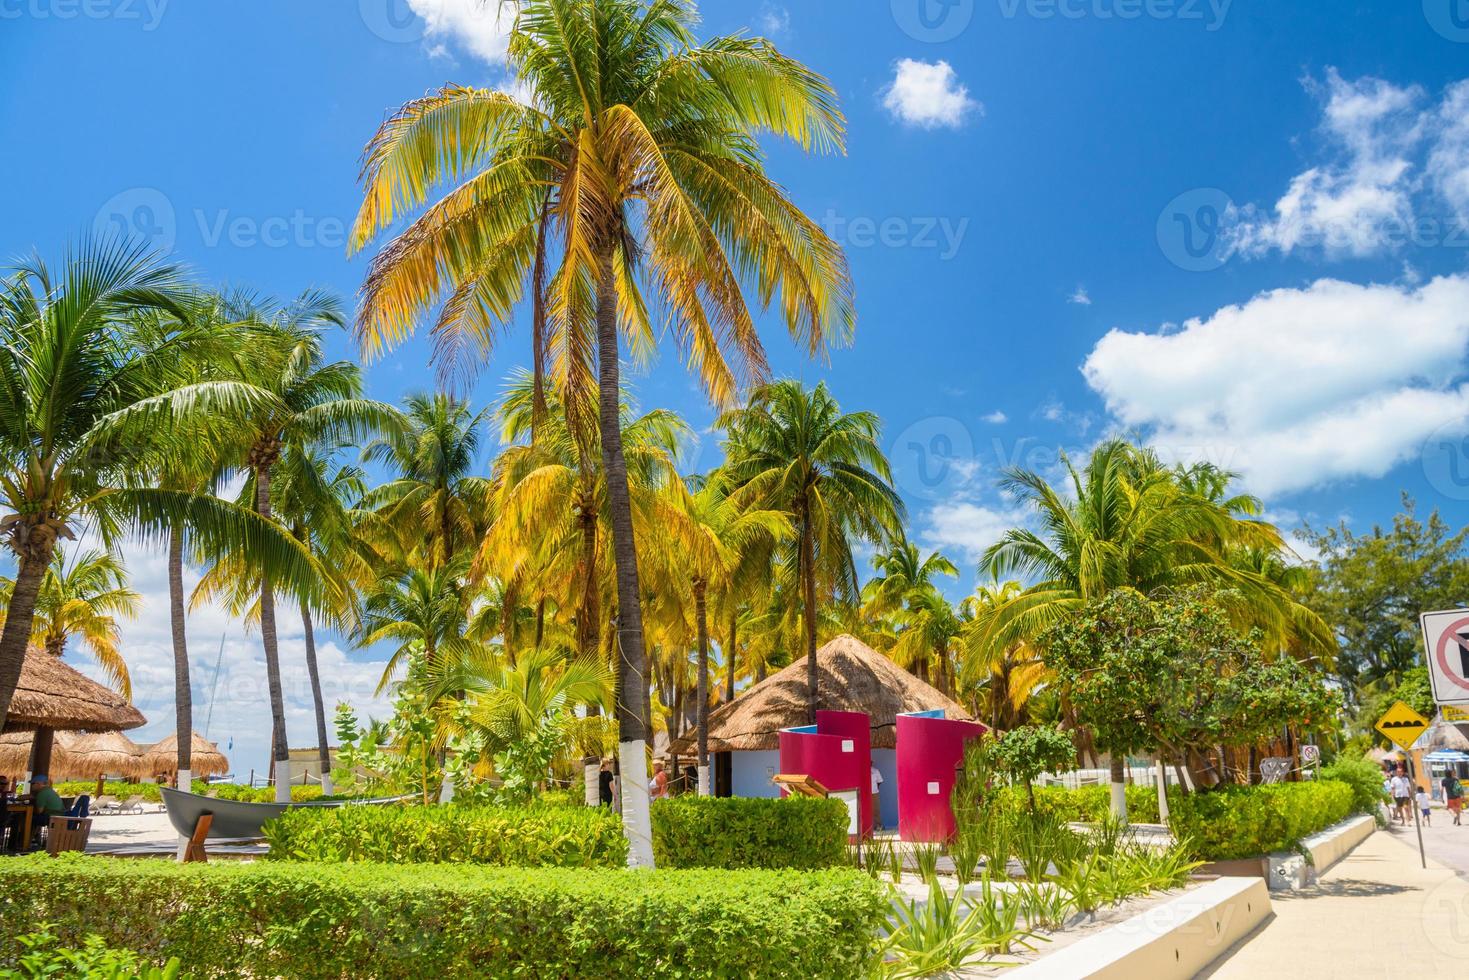 Bungalows im Schatten von Kokospalmen am Strand, Insel Isla Mujeres, Karibik, Cancun, Yucatan, Mexiko foto